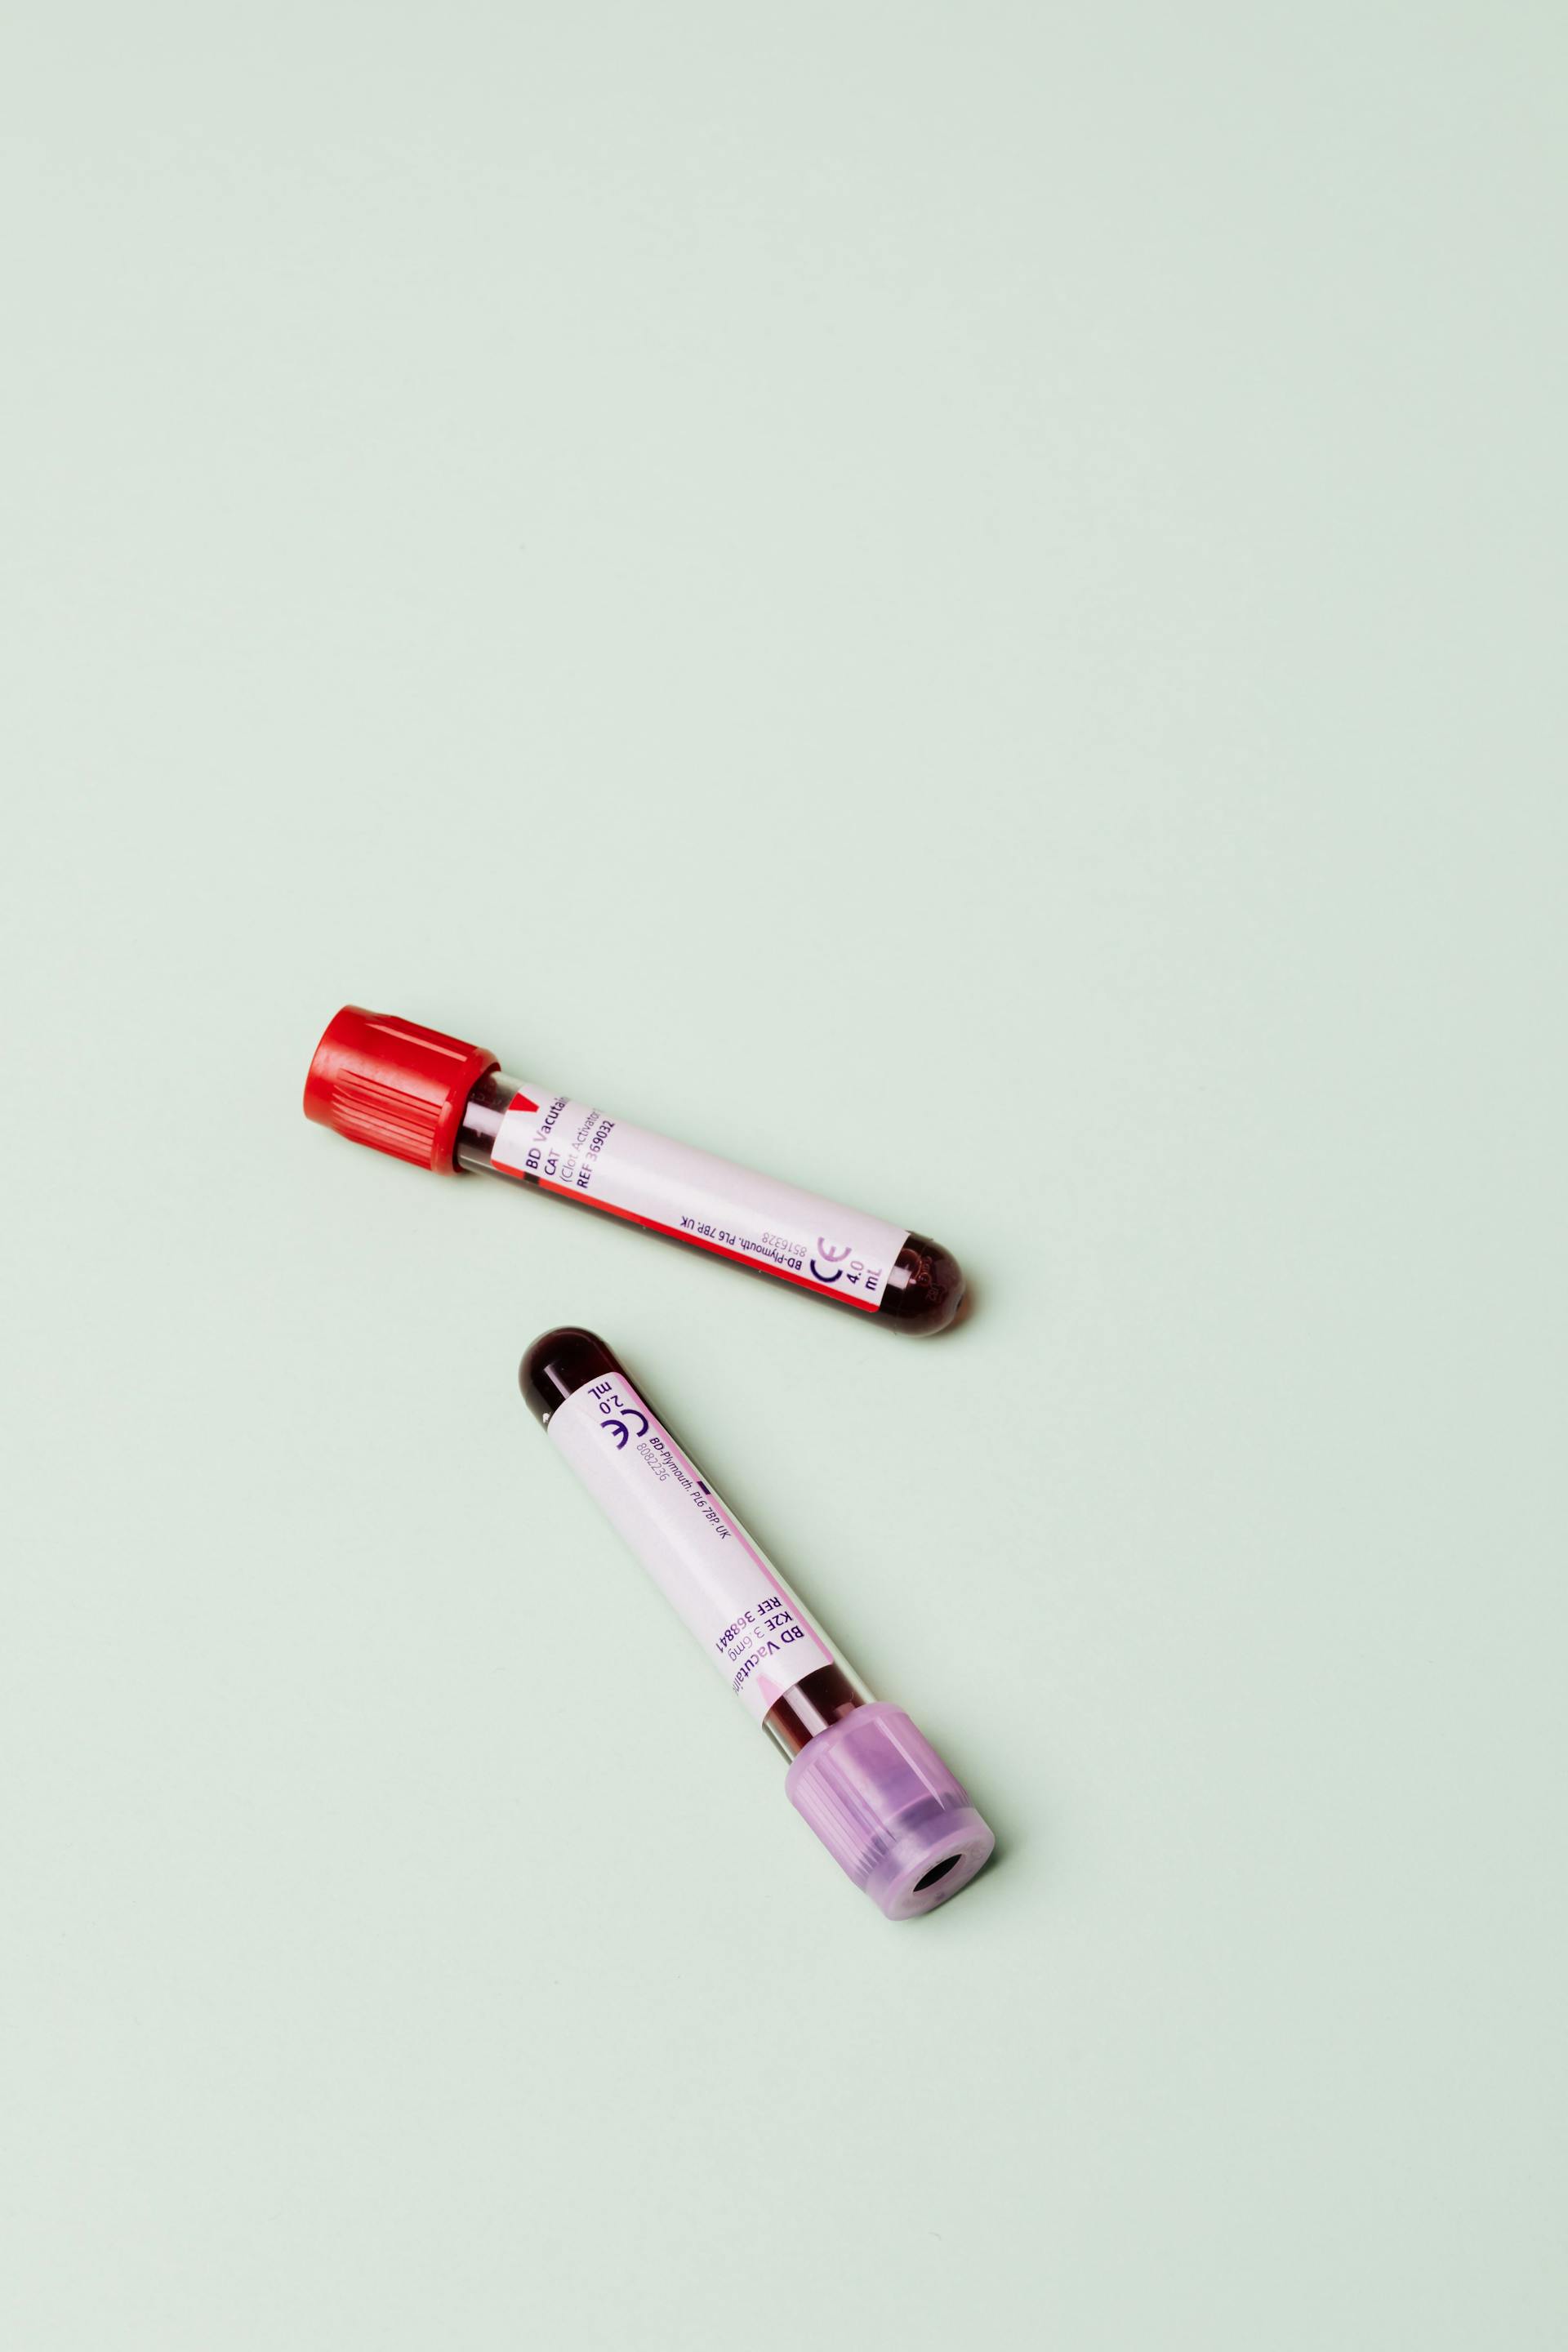 Two vials of blood | Source: Pexels